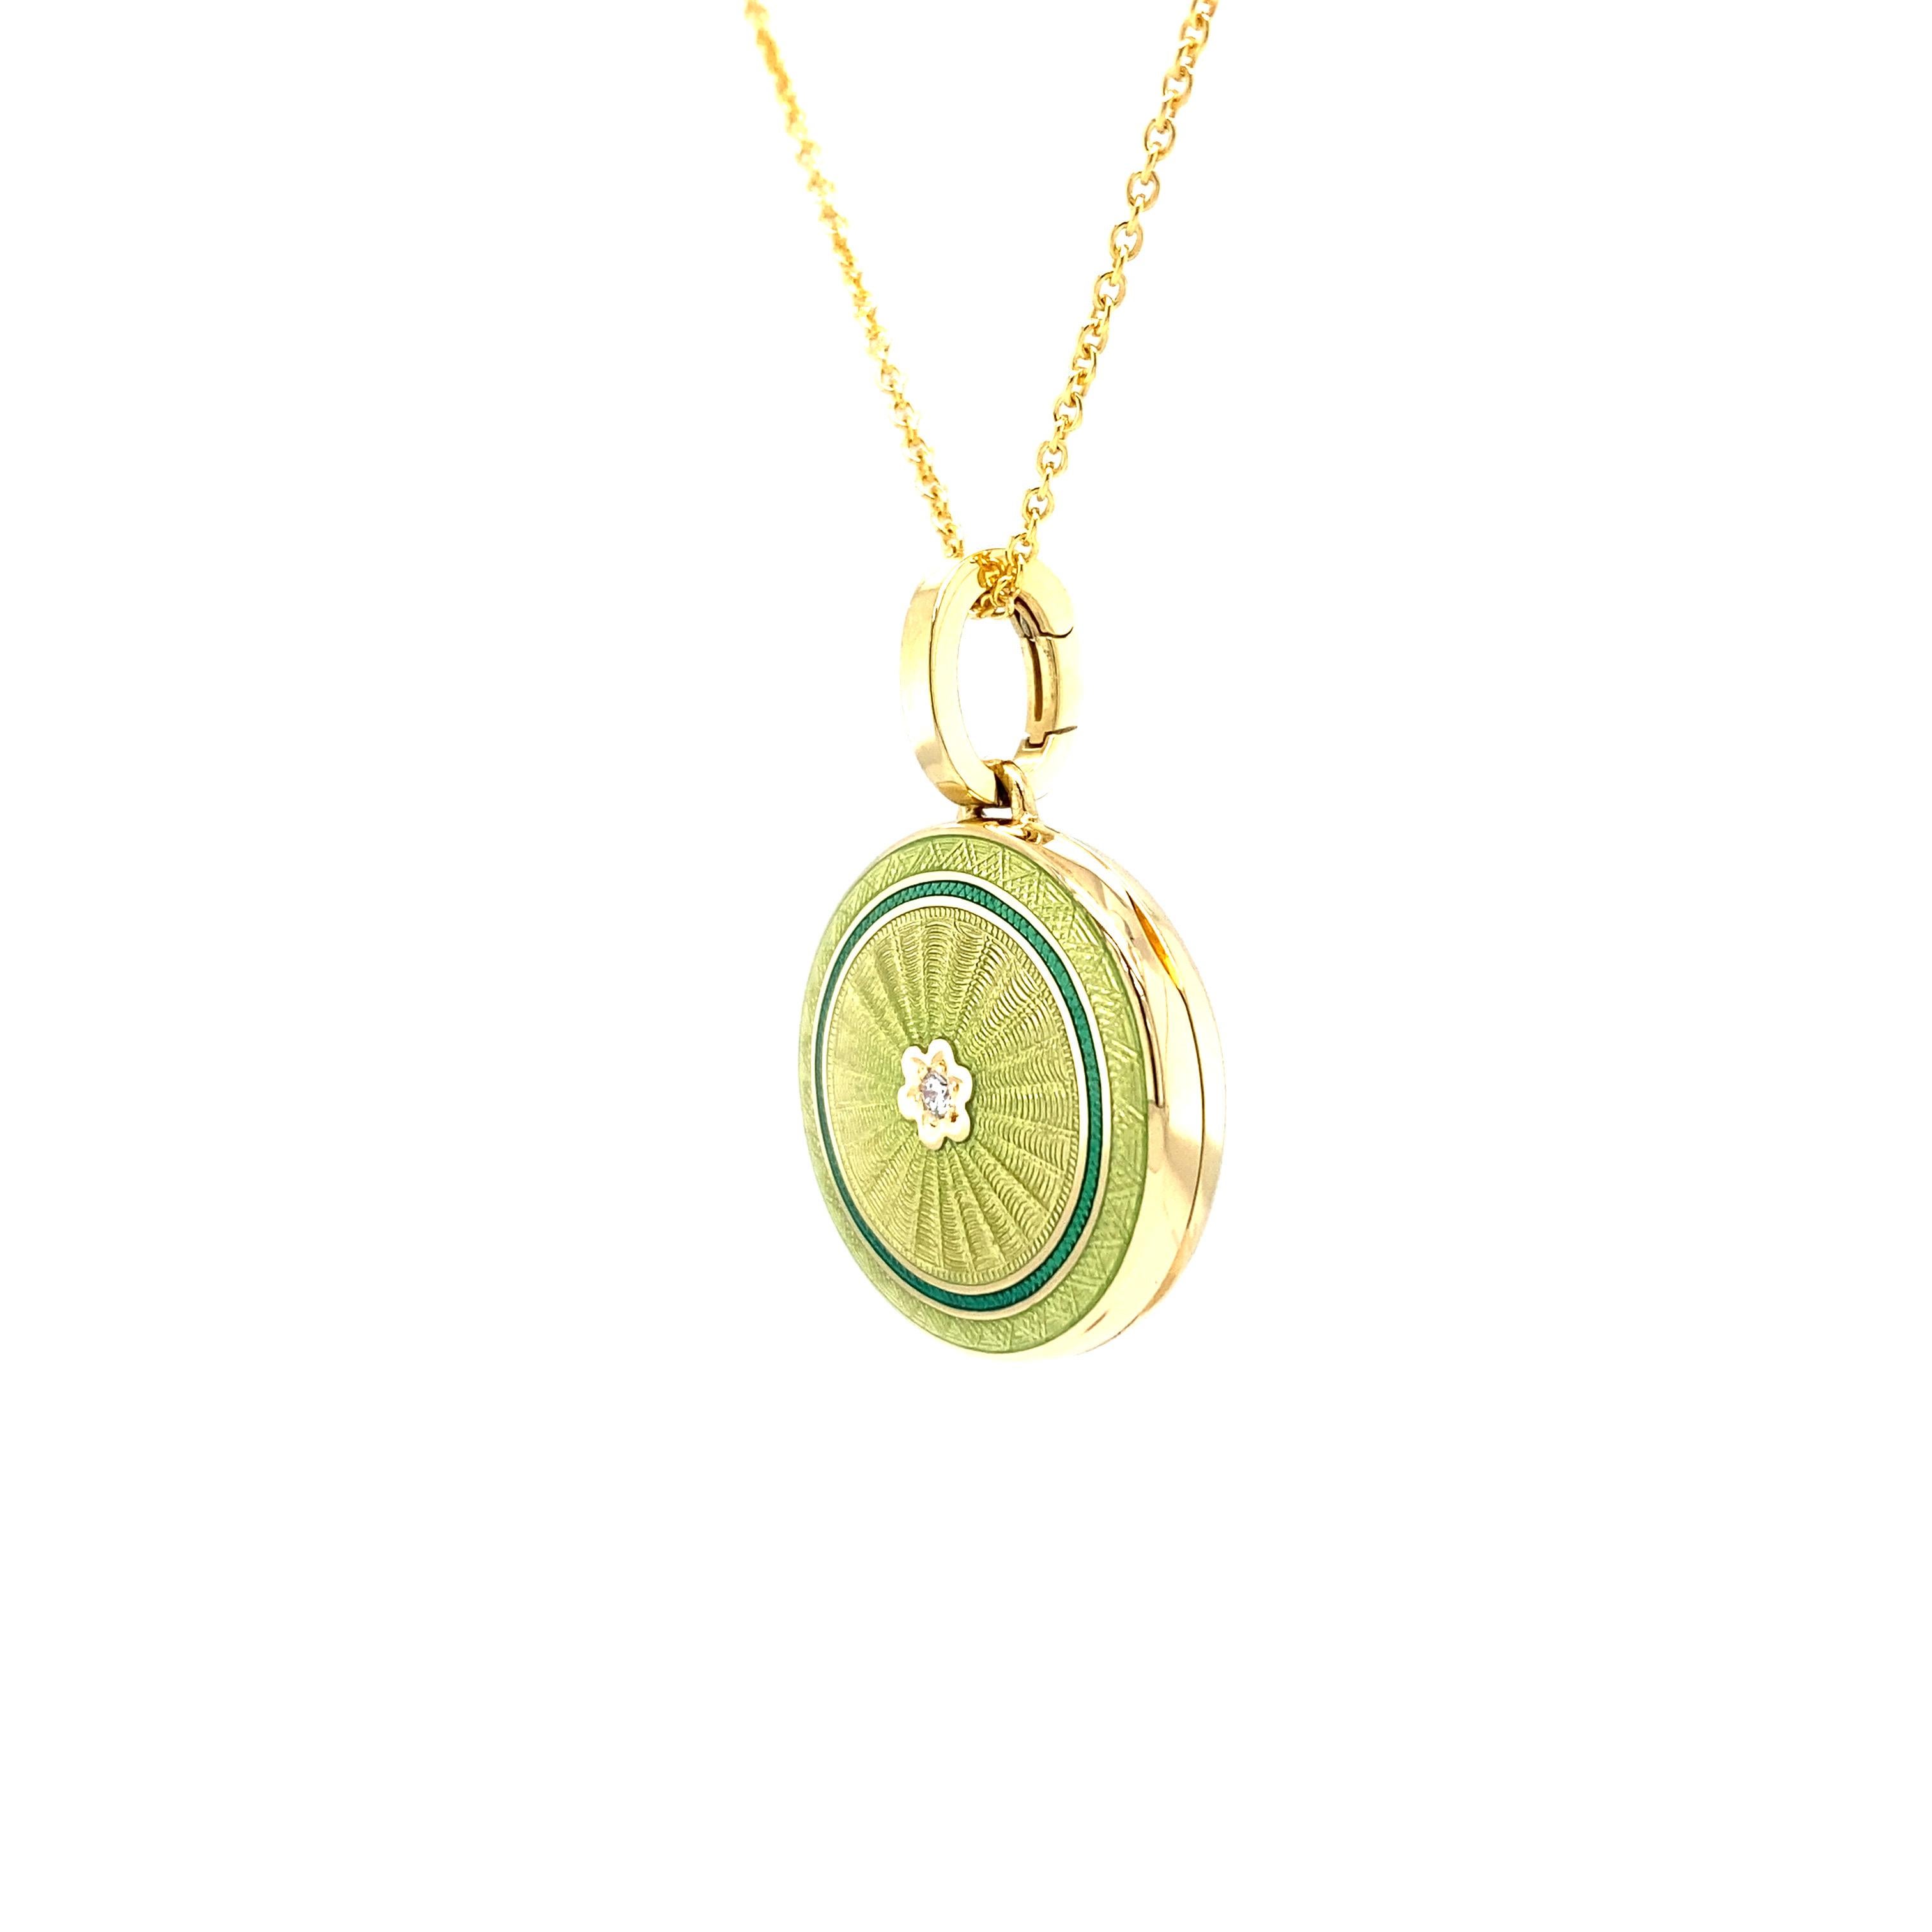 Brilliant Cut Round Locket Pendant Necklace 18k Yellow Gold Green Vitreous Enamel Dia 0.03ct For Sale